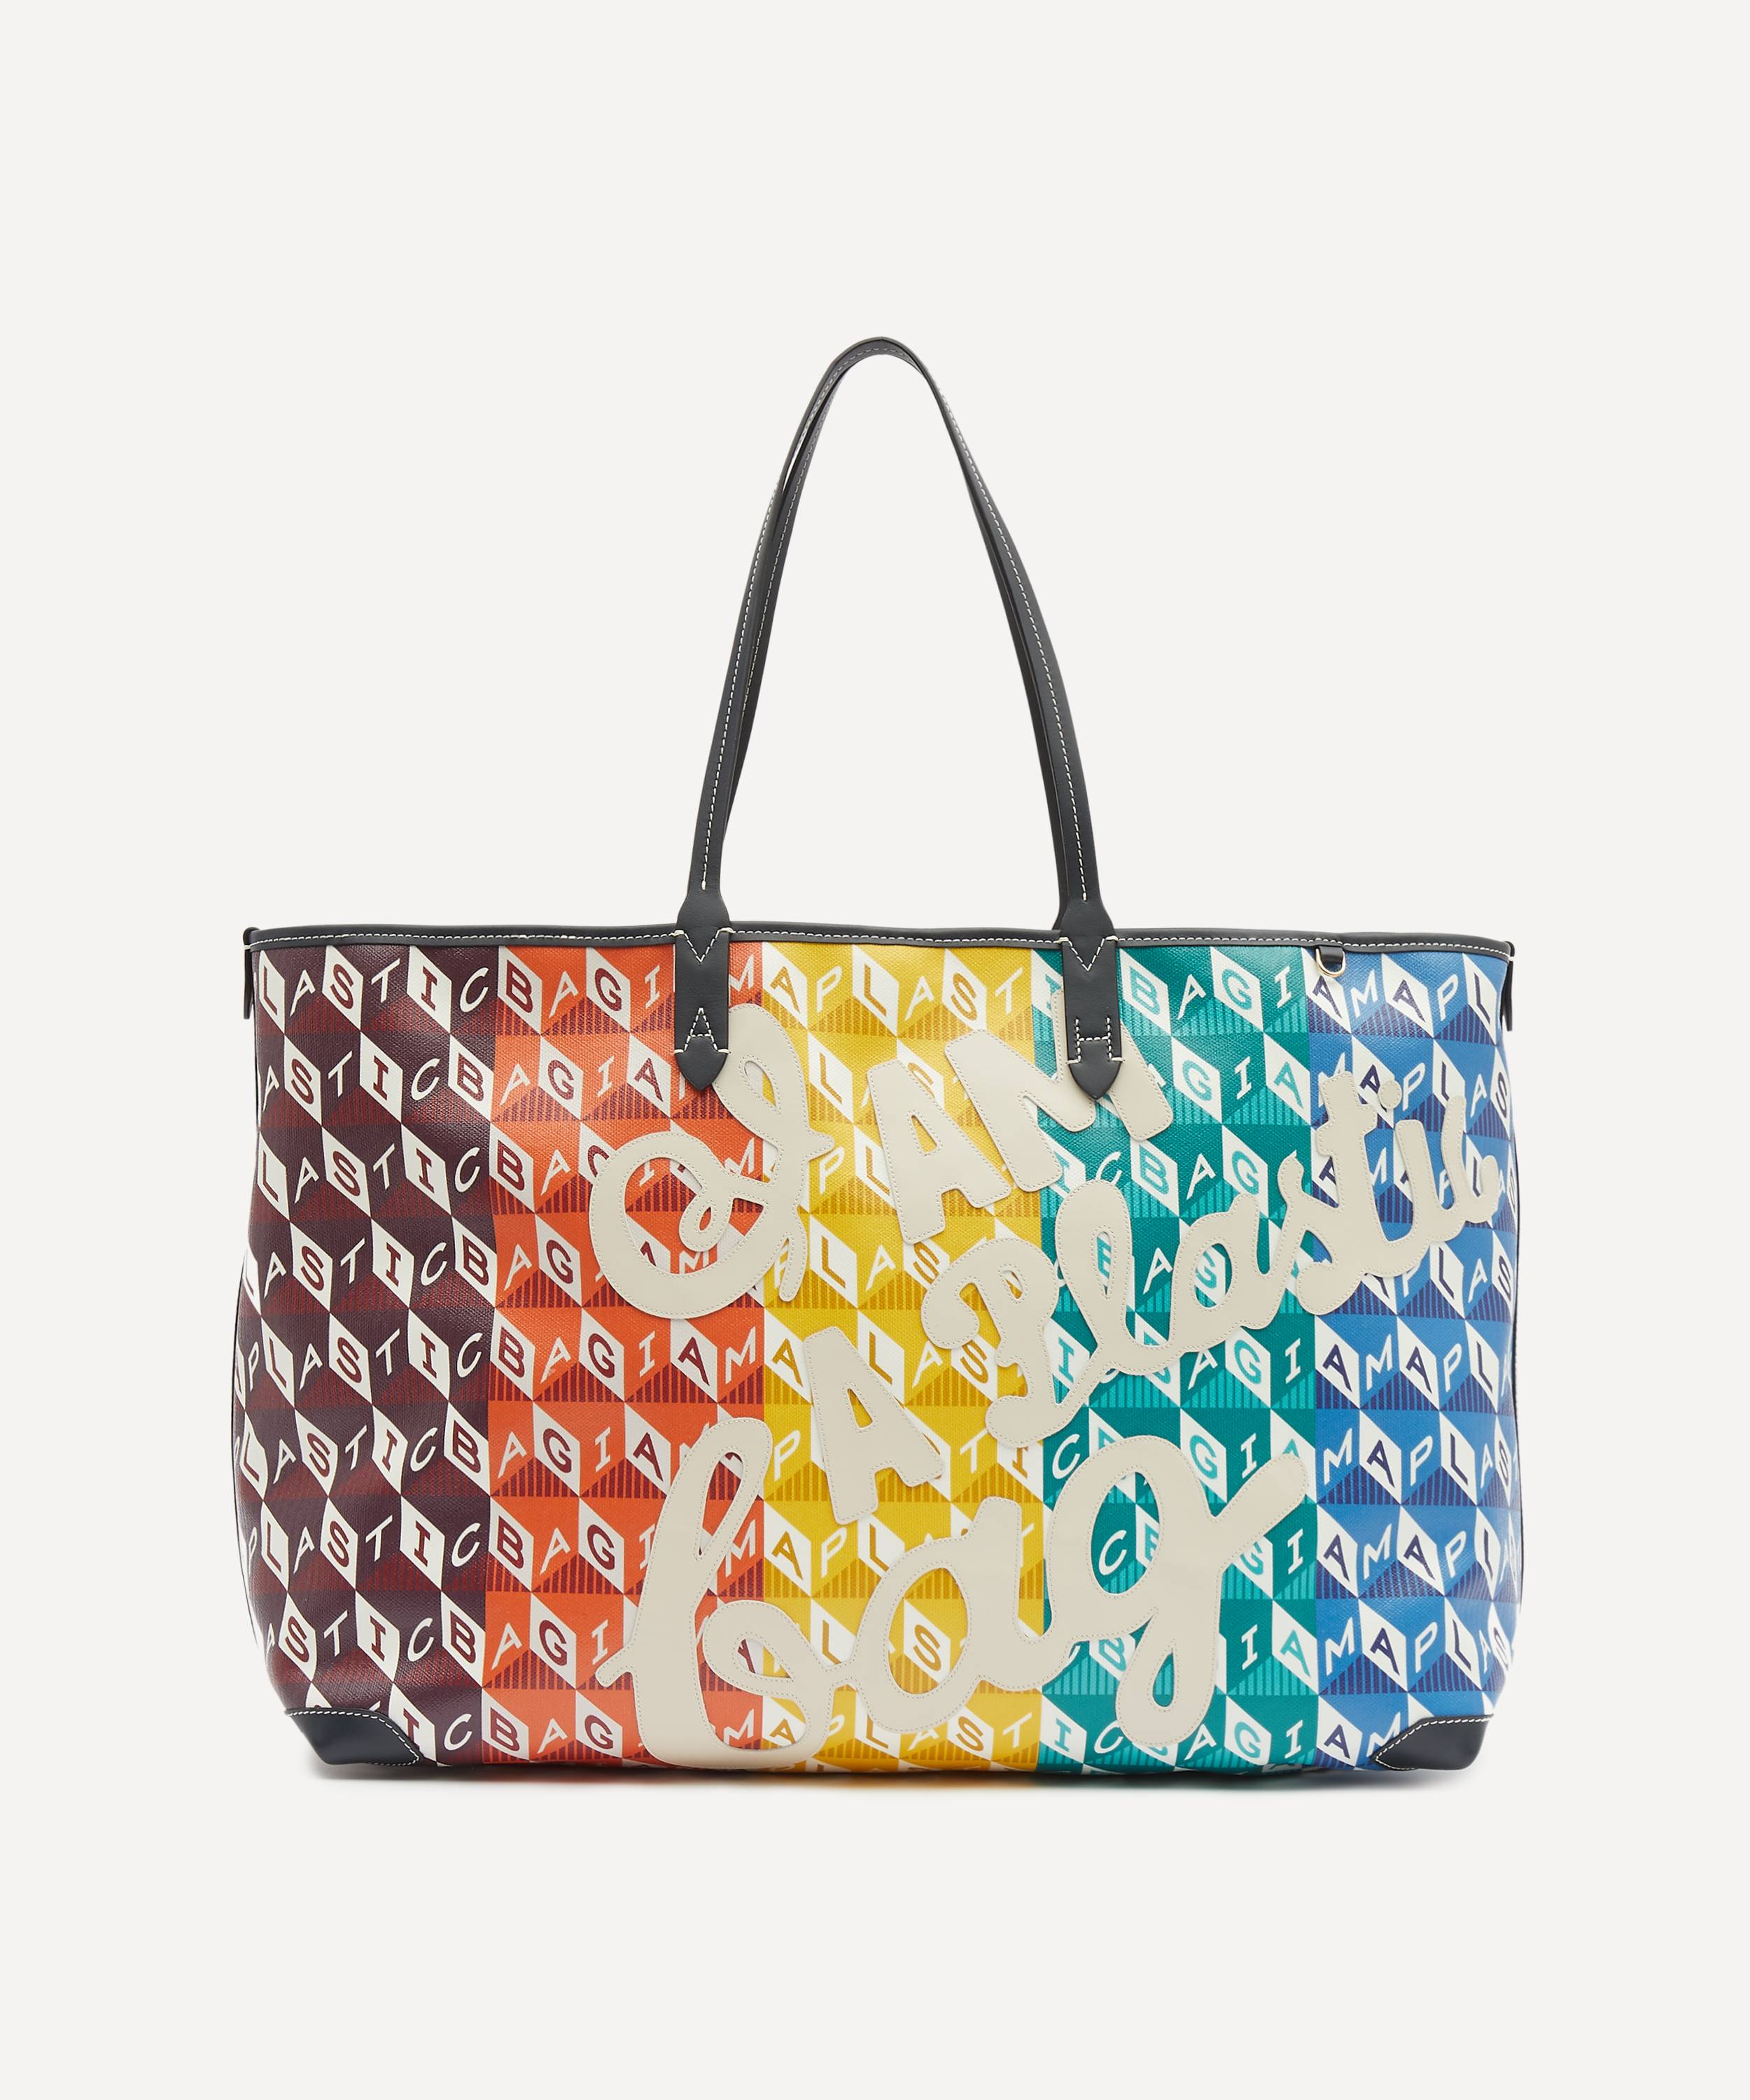 Anya Hindmarch I Am A Plastic Bag Recycled Canvas Tote Bag | Liberty